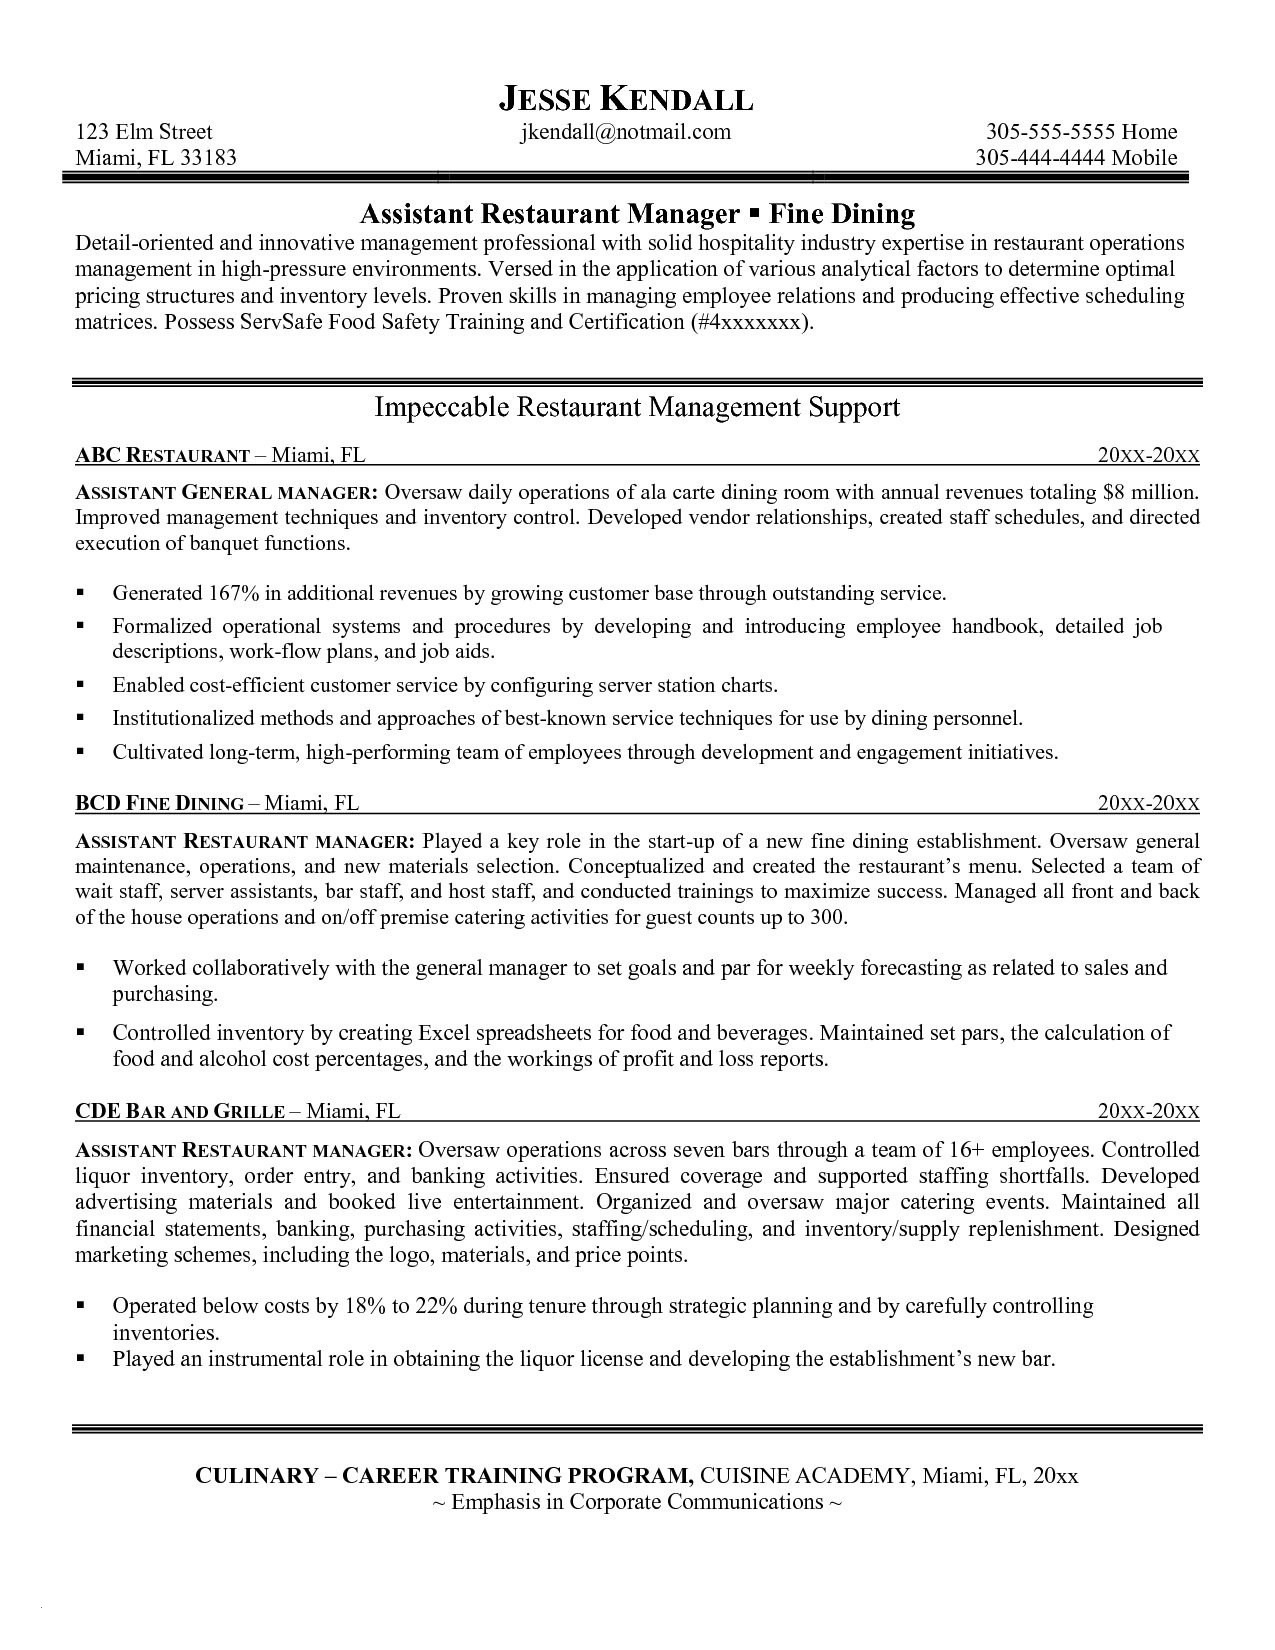 General Manager Resume Headline June 10 Within Restaurant Manager Job Description Template